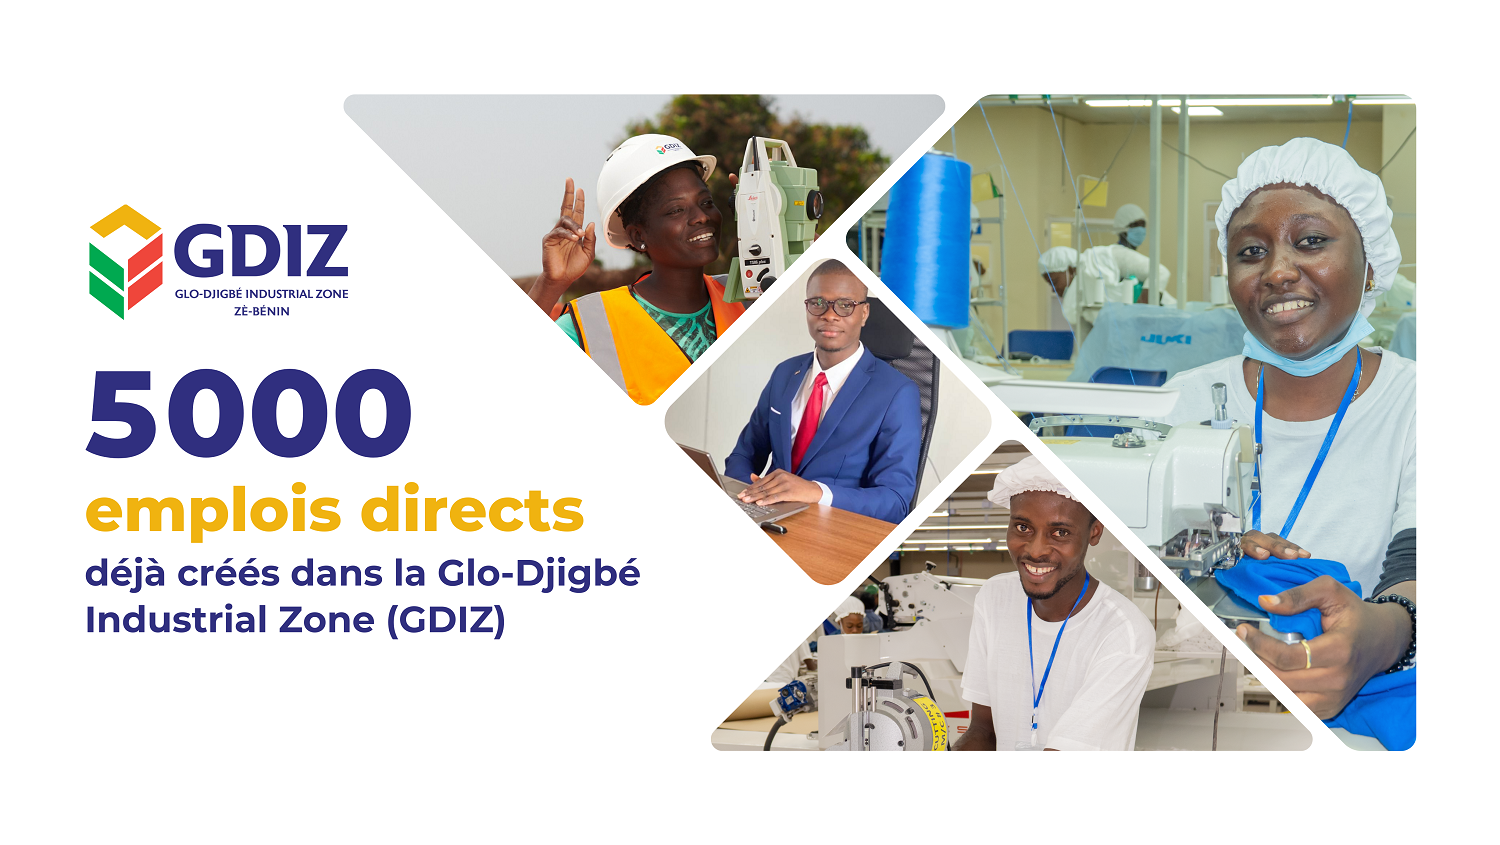 5,000 direct jobs already created in GDIZ